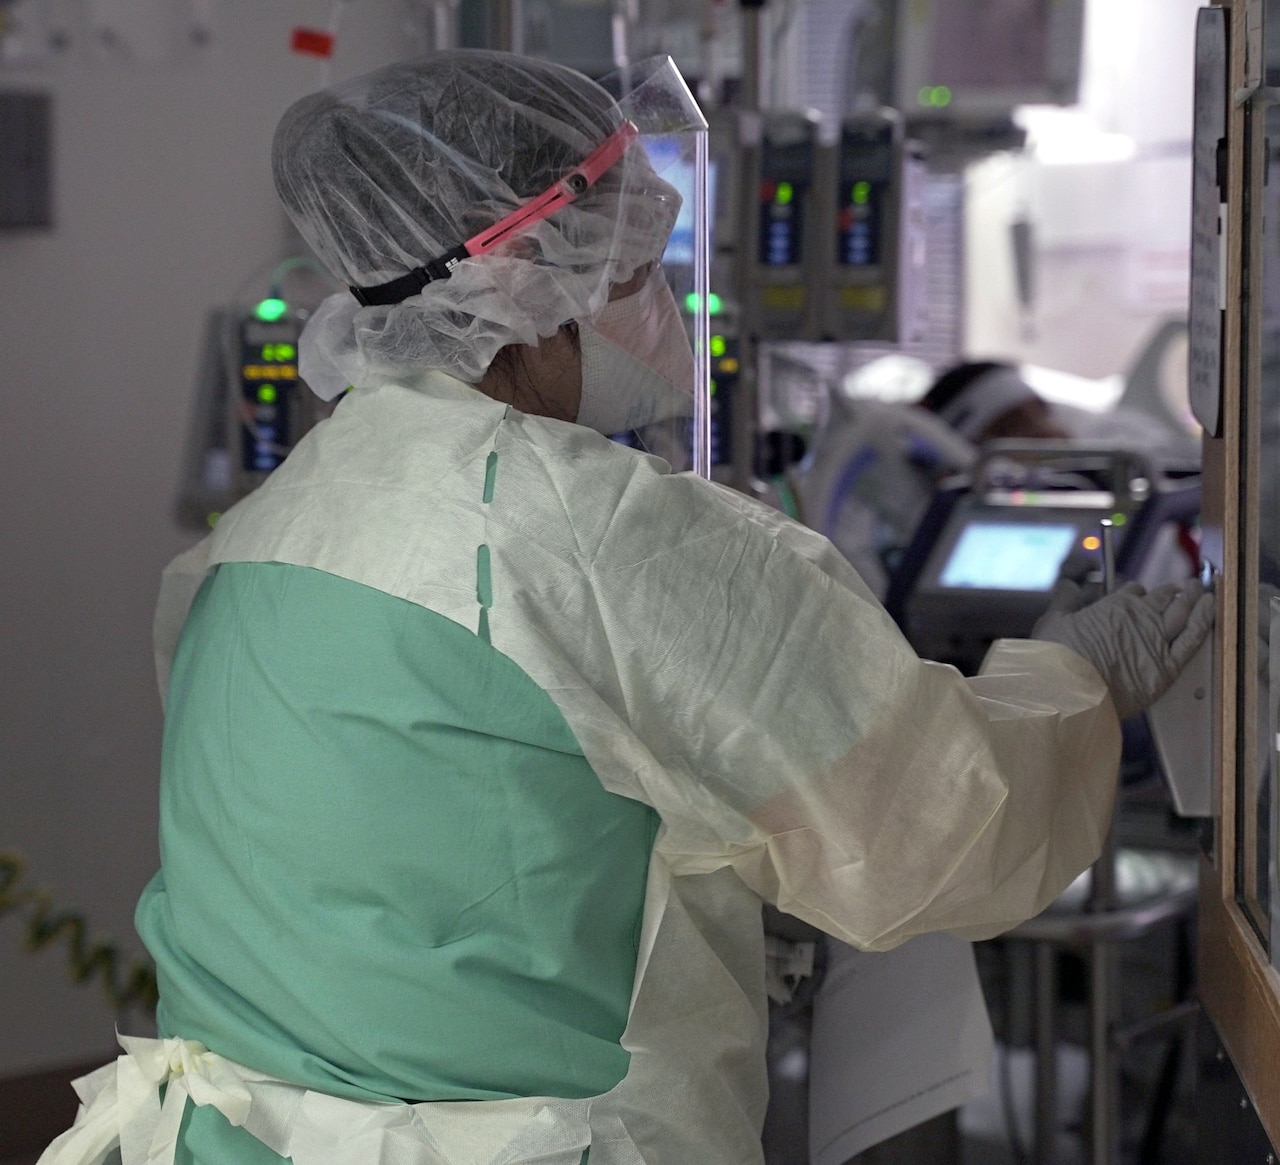 A nurse enters a patient room in a COVID-19 intensive care unit.